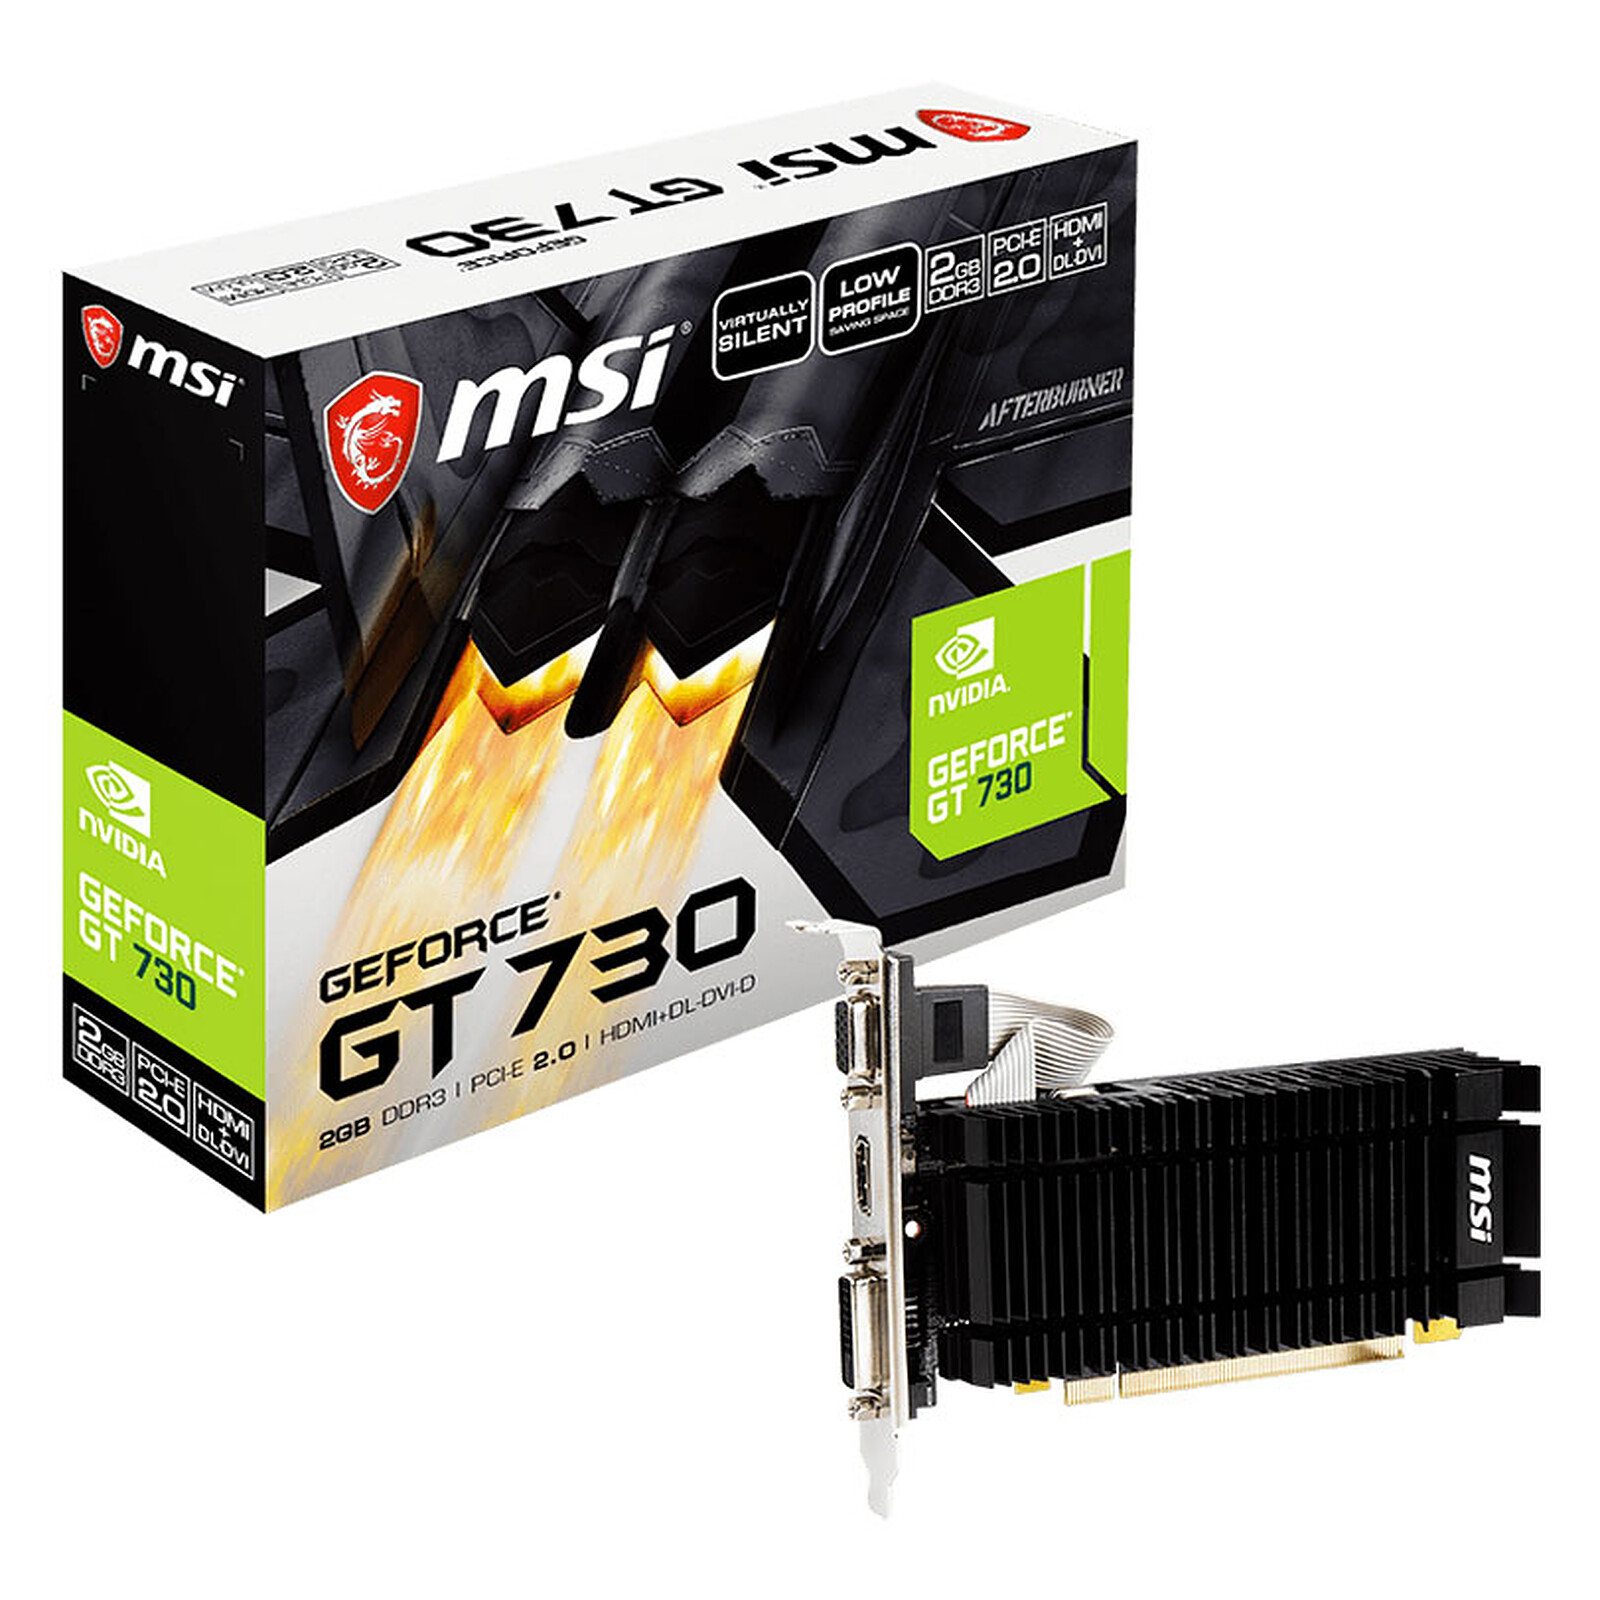 NEW Gaming Nvidia Geforce GT 730 4GB Low profile Graphics card VGA,HDMI&DVI  US